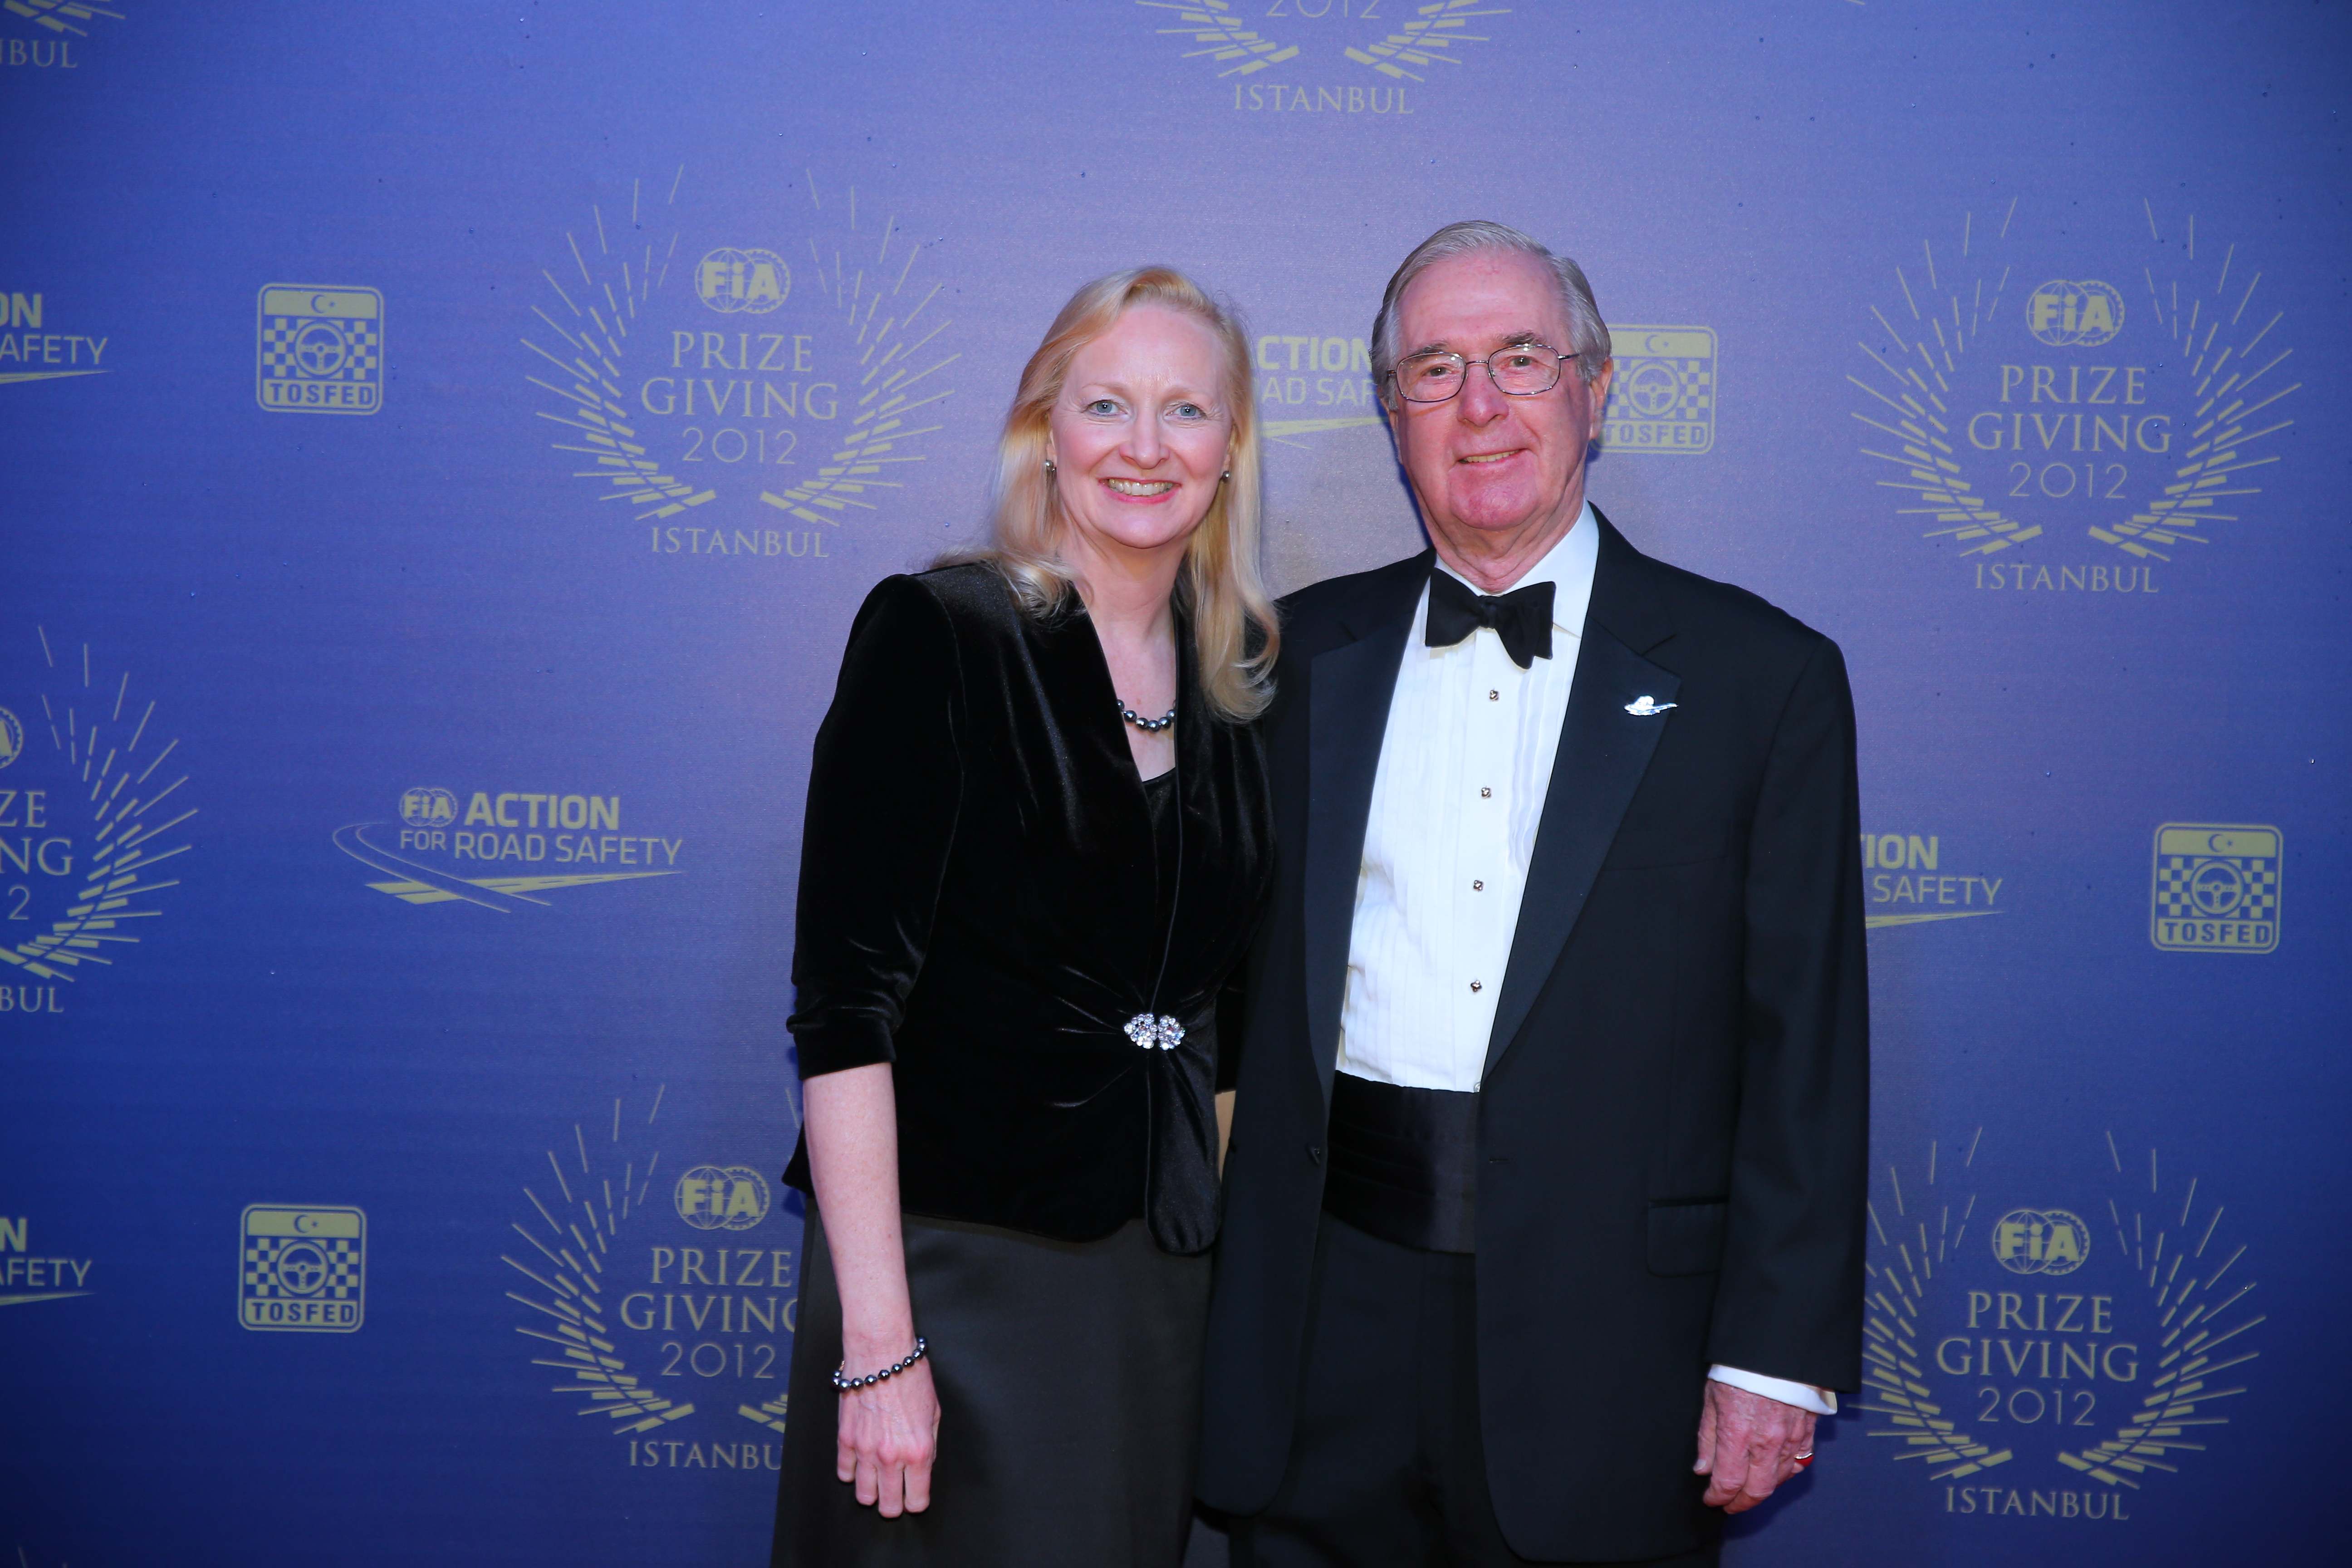 FIA Prize Giving Gala 2012 | Federation Internationale de l'Automobile